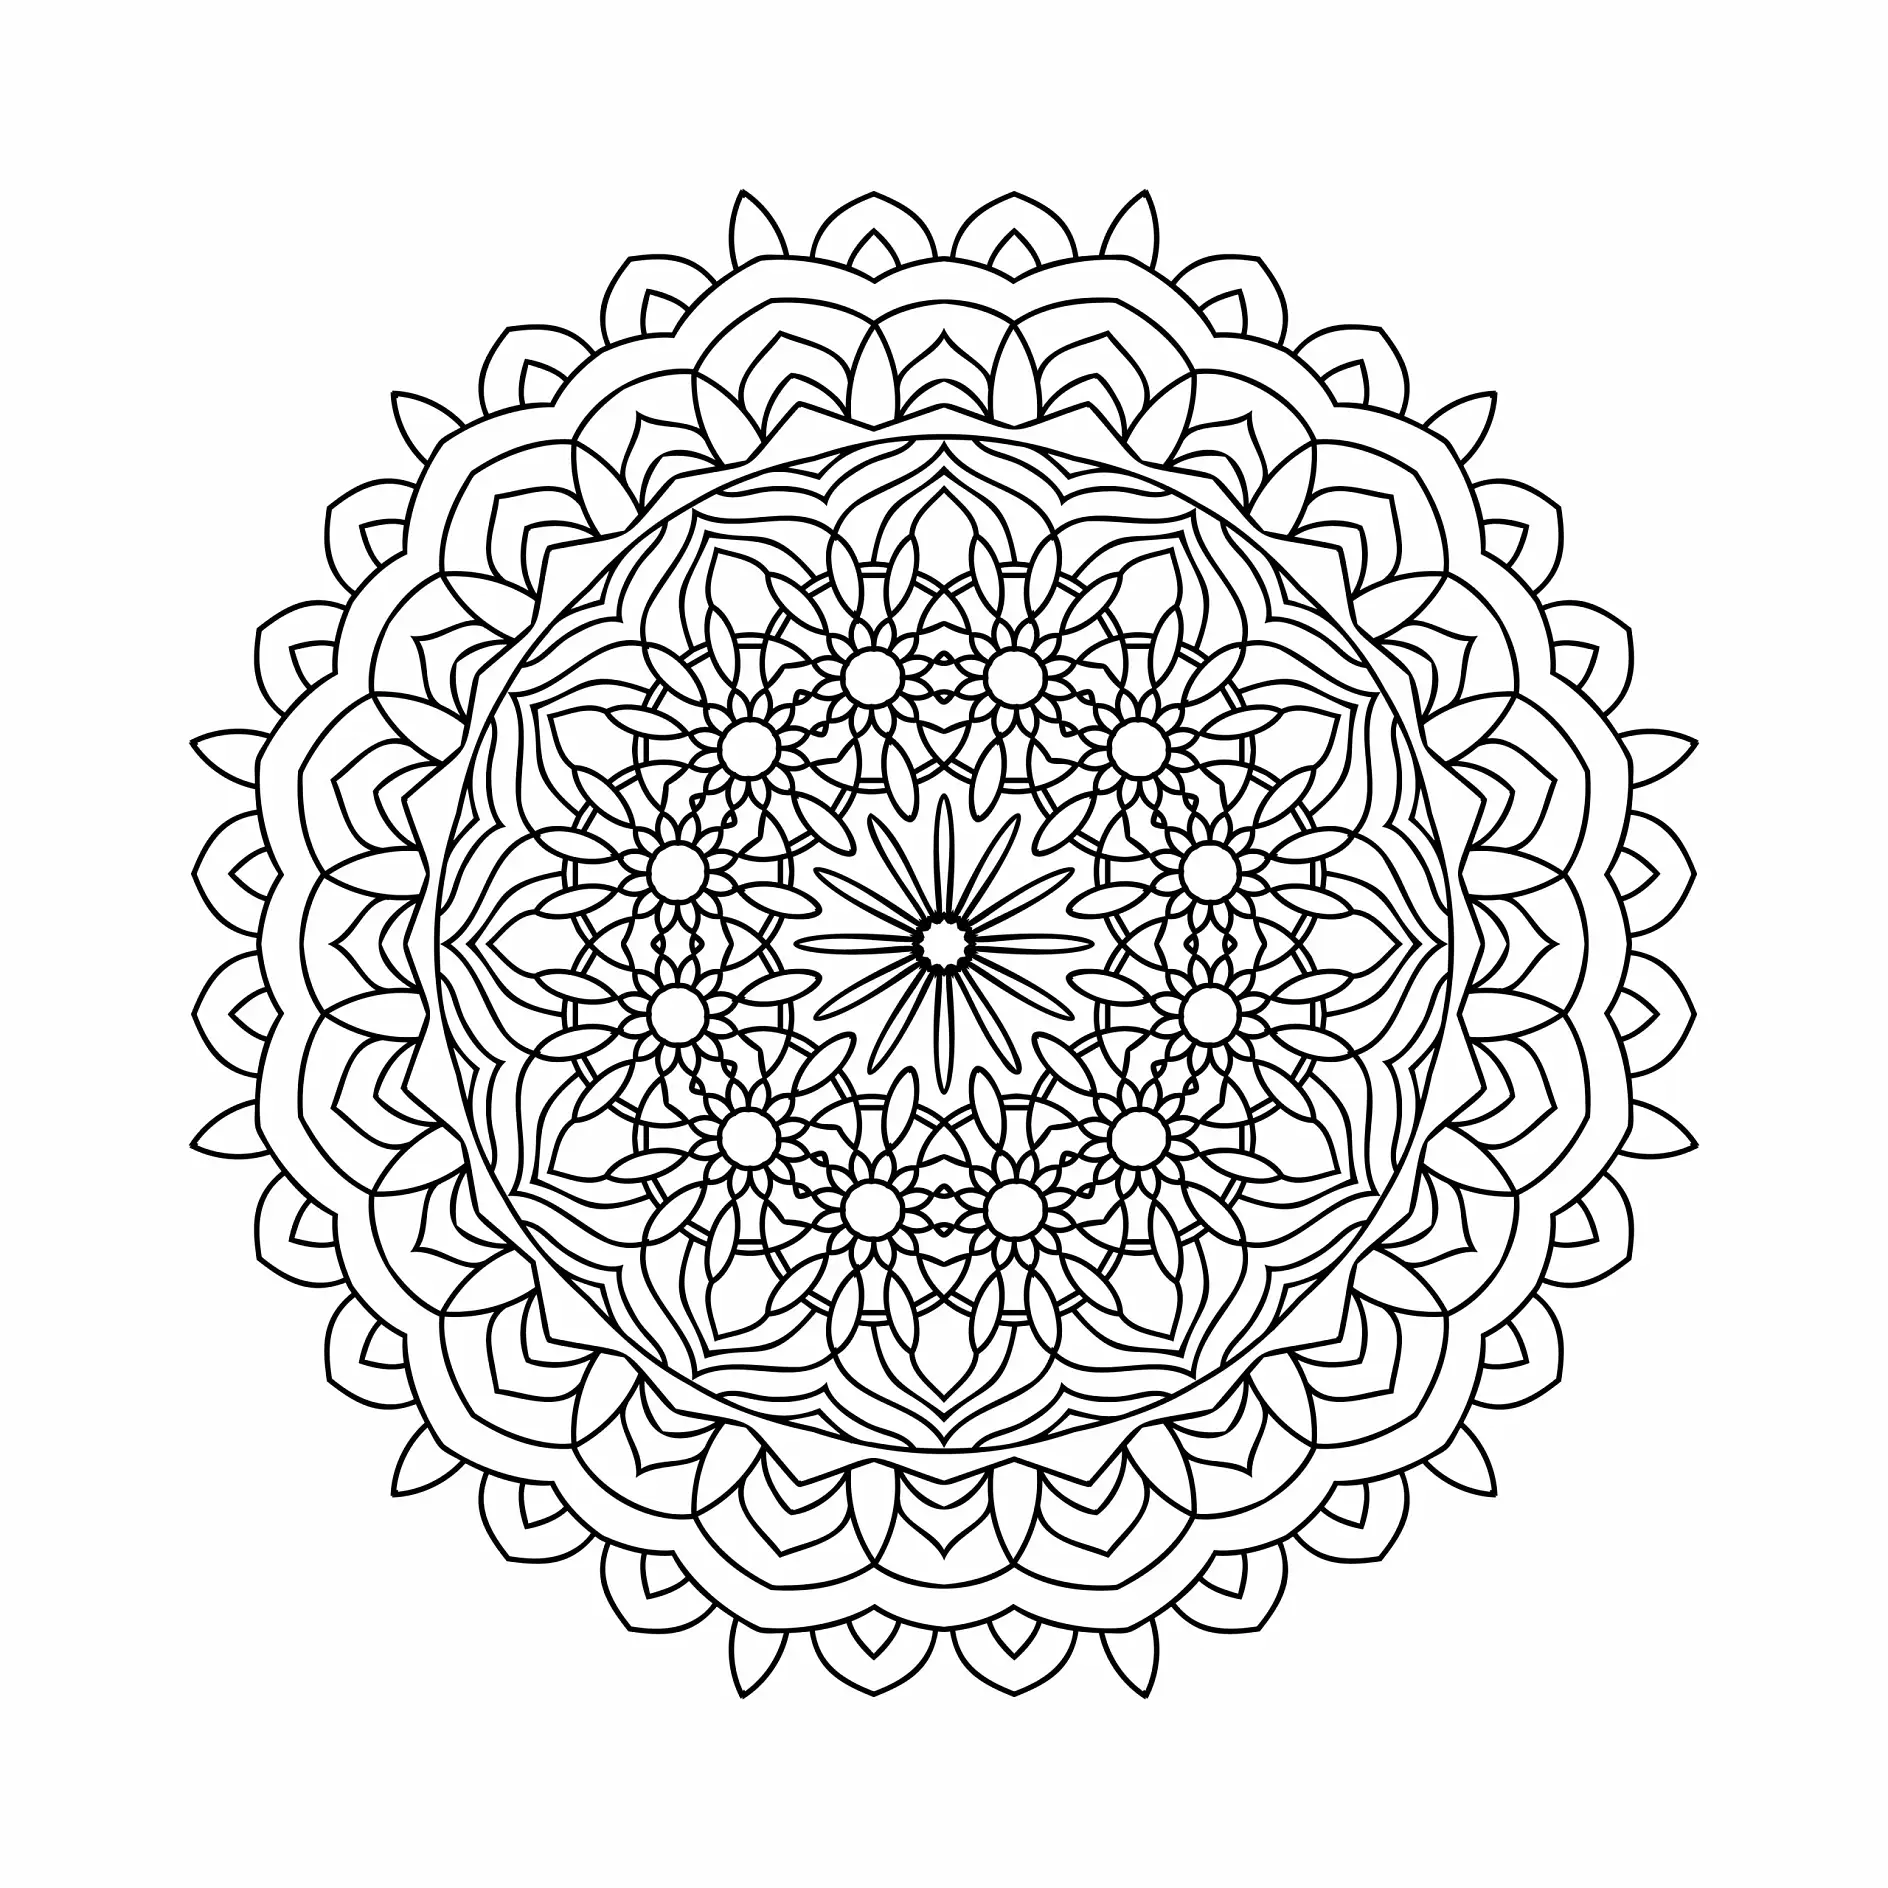 Ausmalbild Mandala mit Blüten und Kreisen